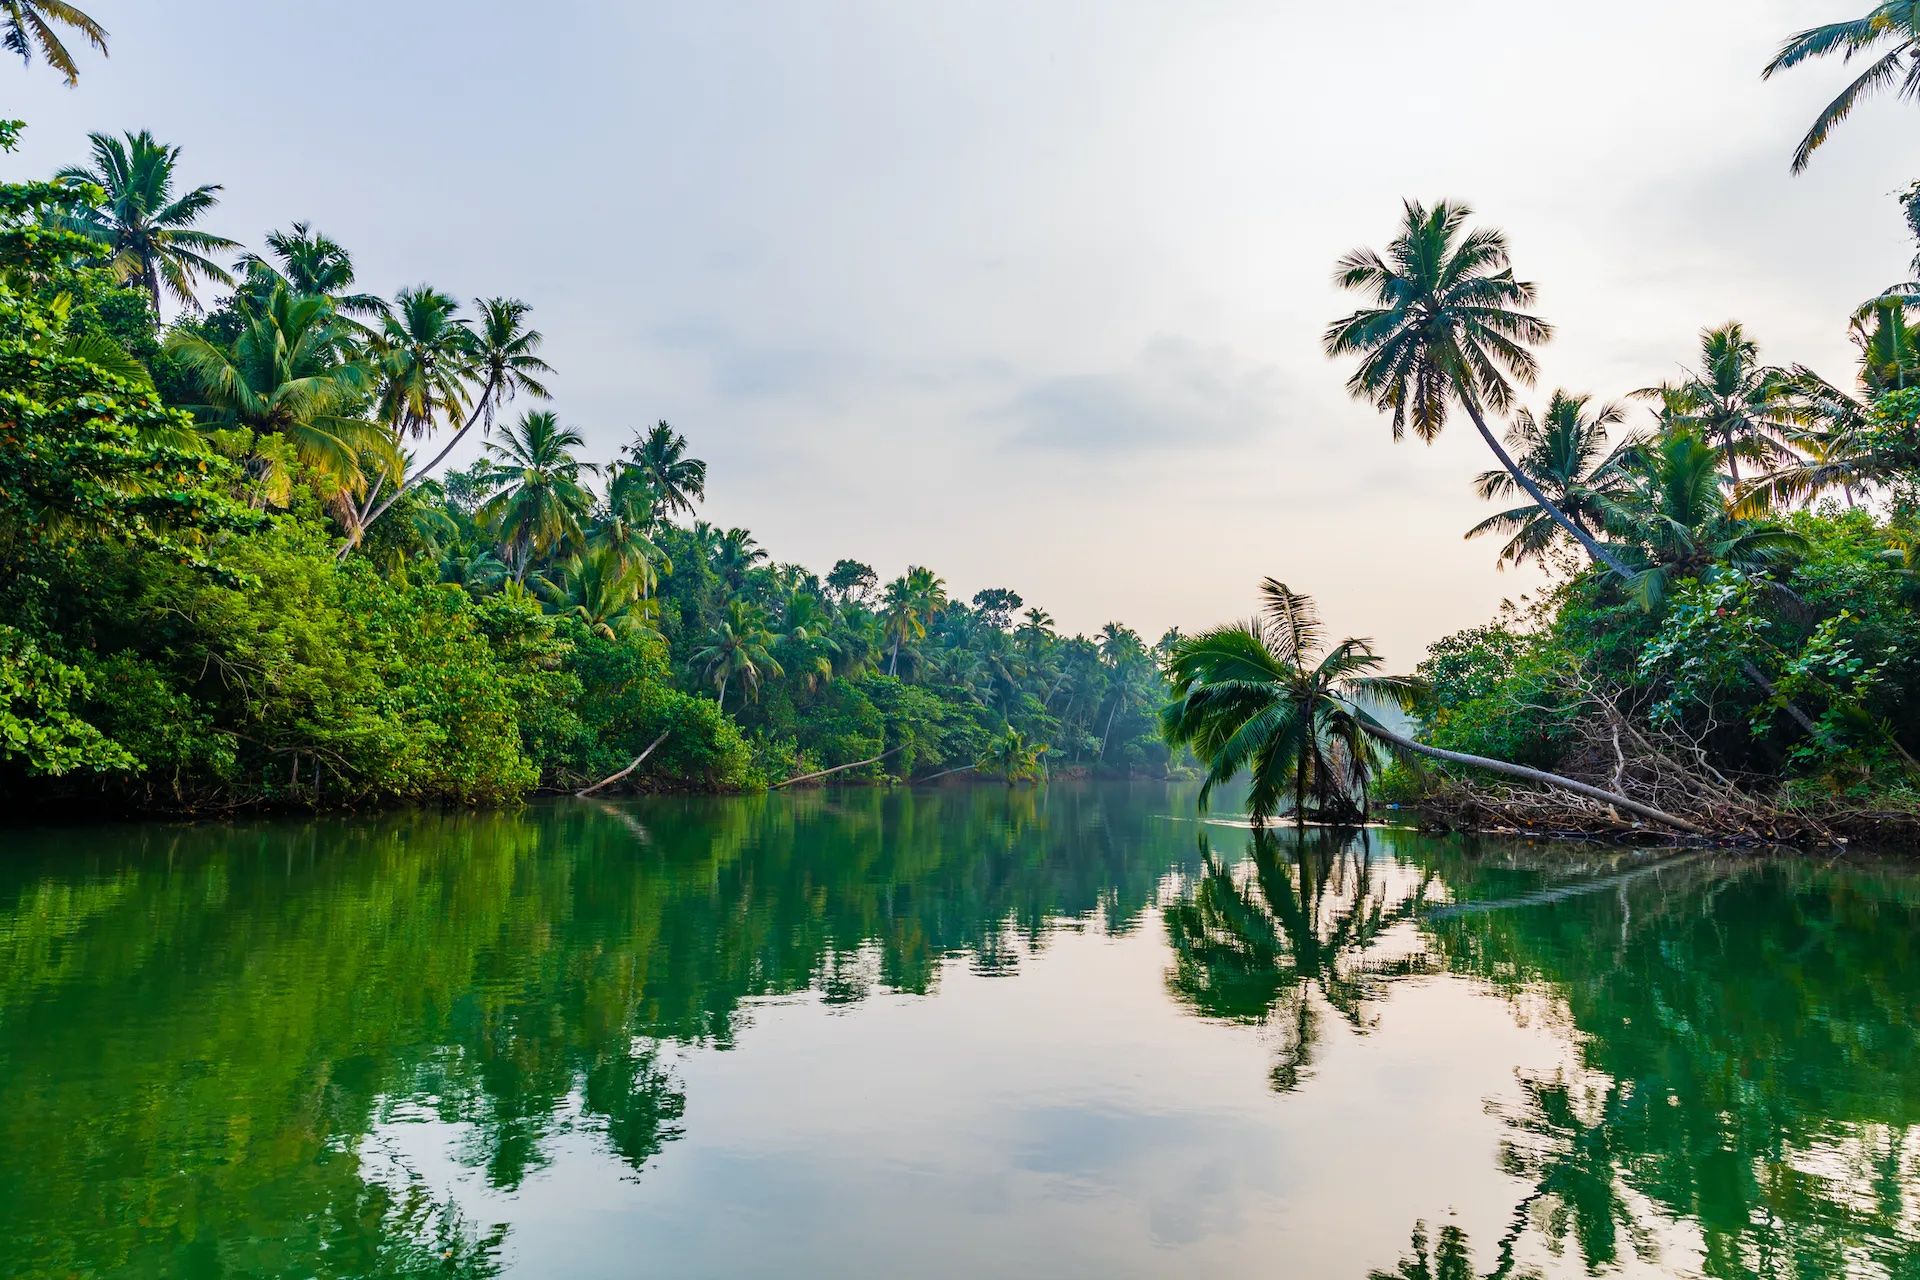 A quiet backwater lagoon in Kerala, India